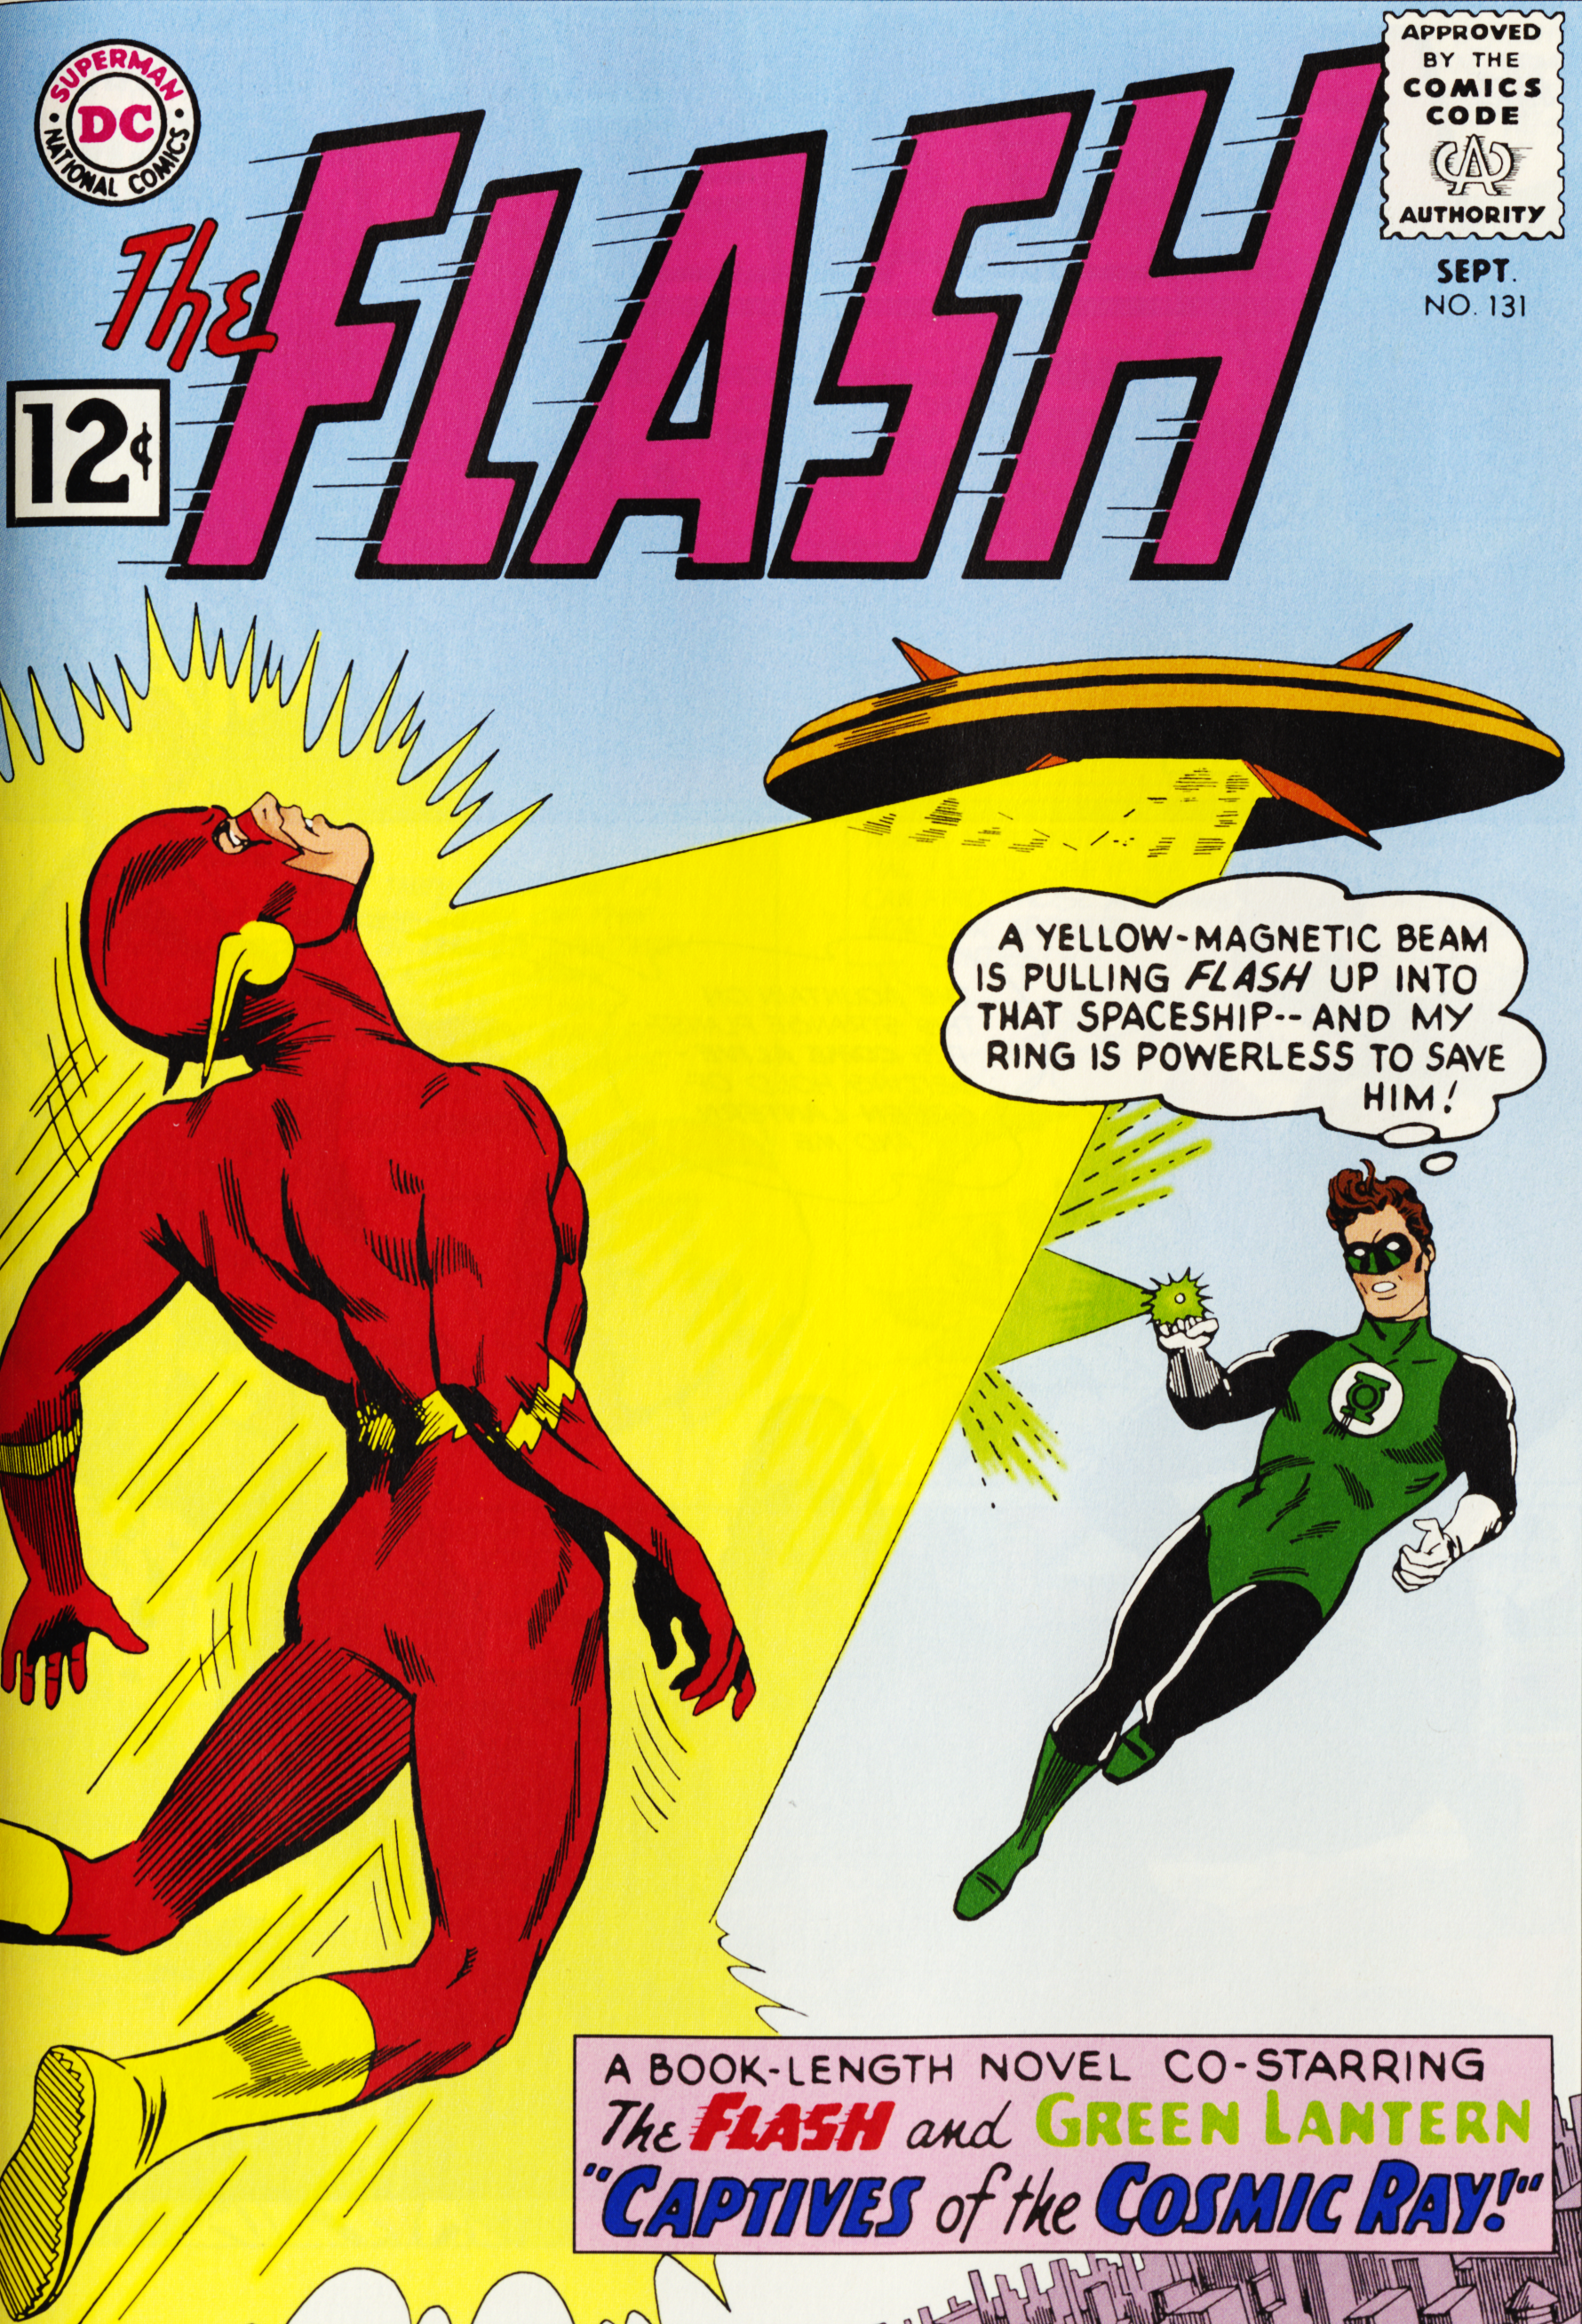 The Flash no.131